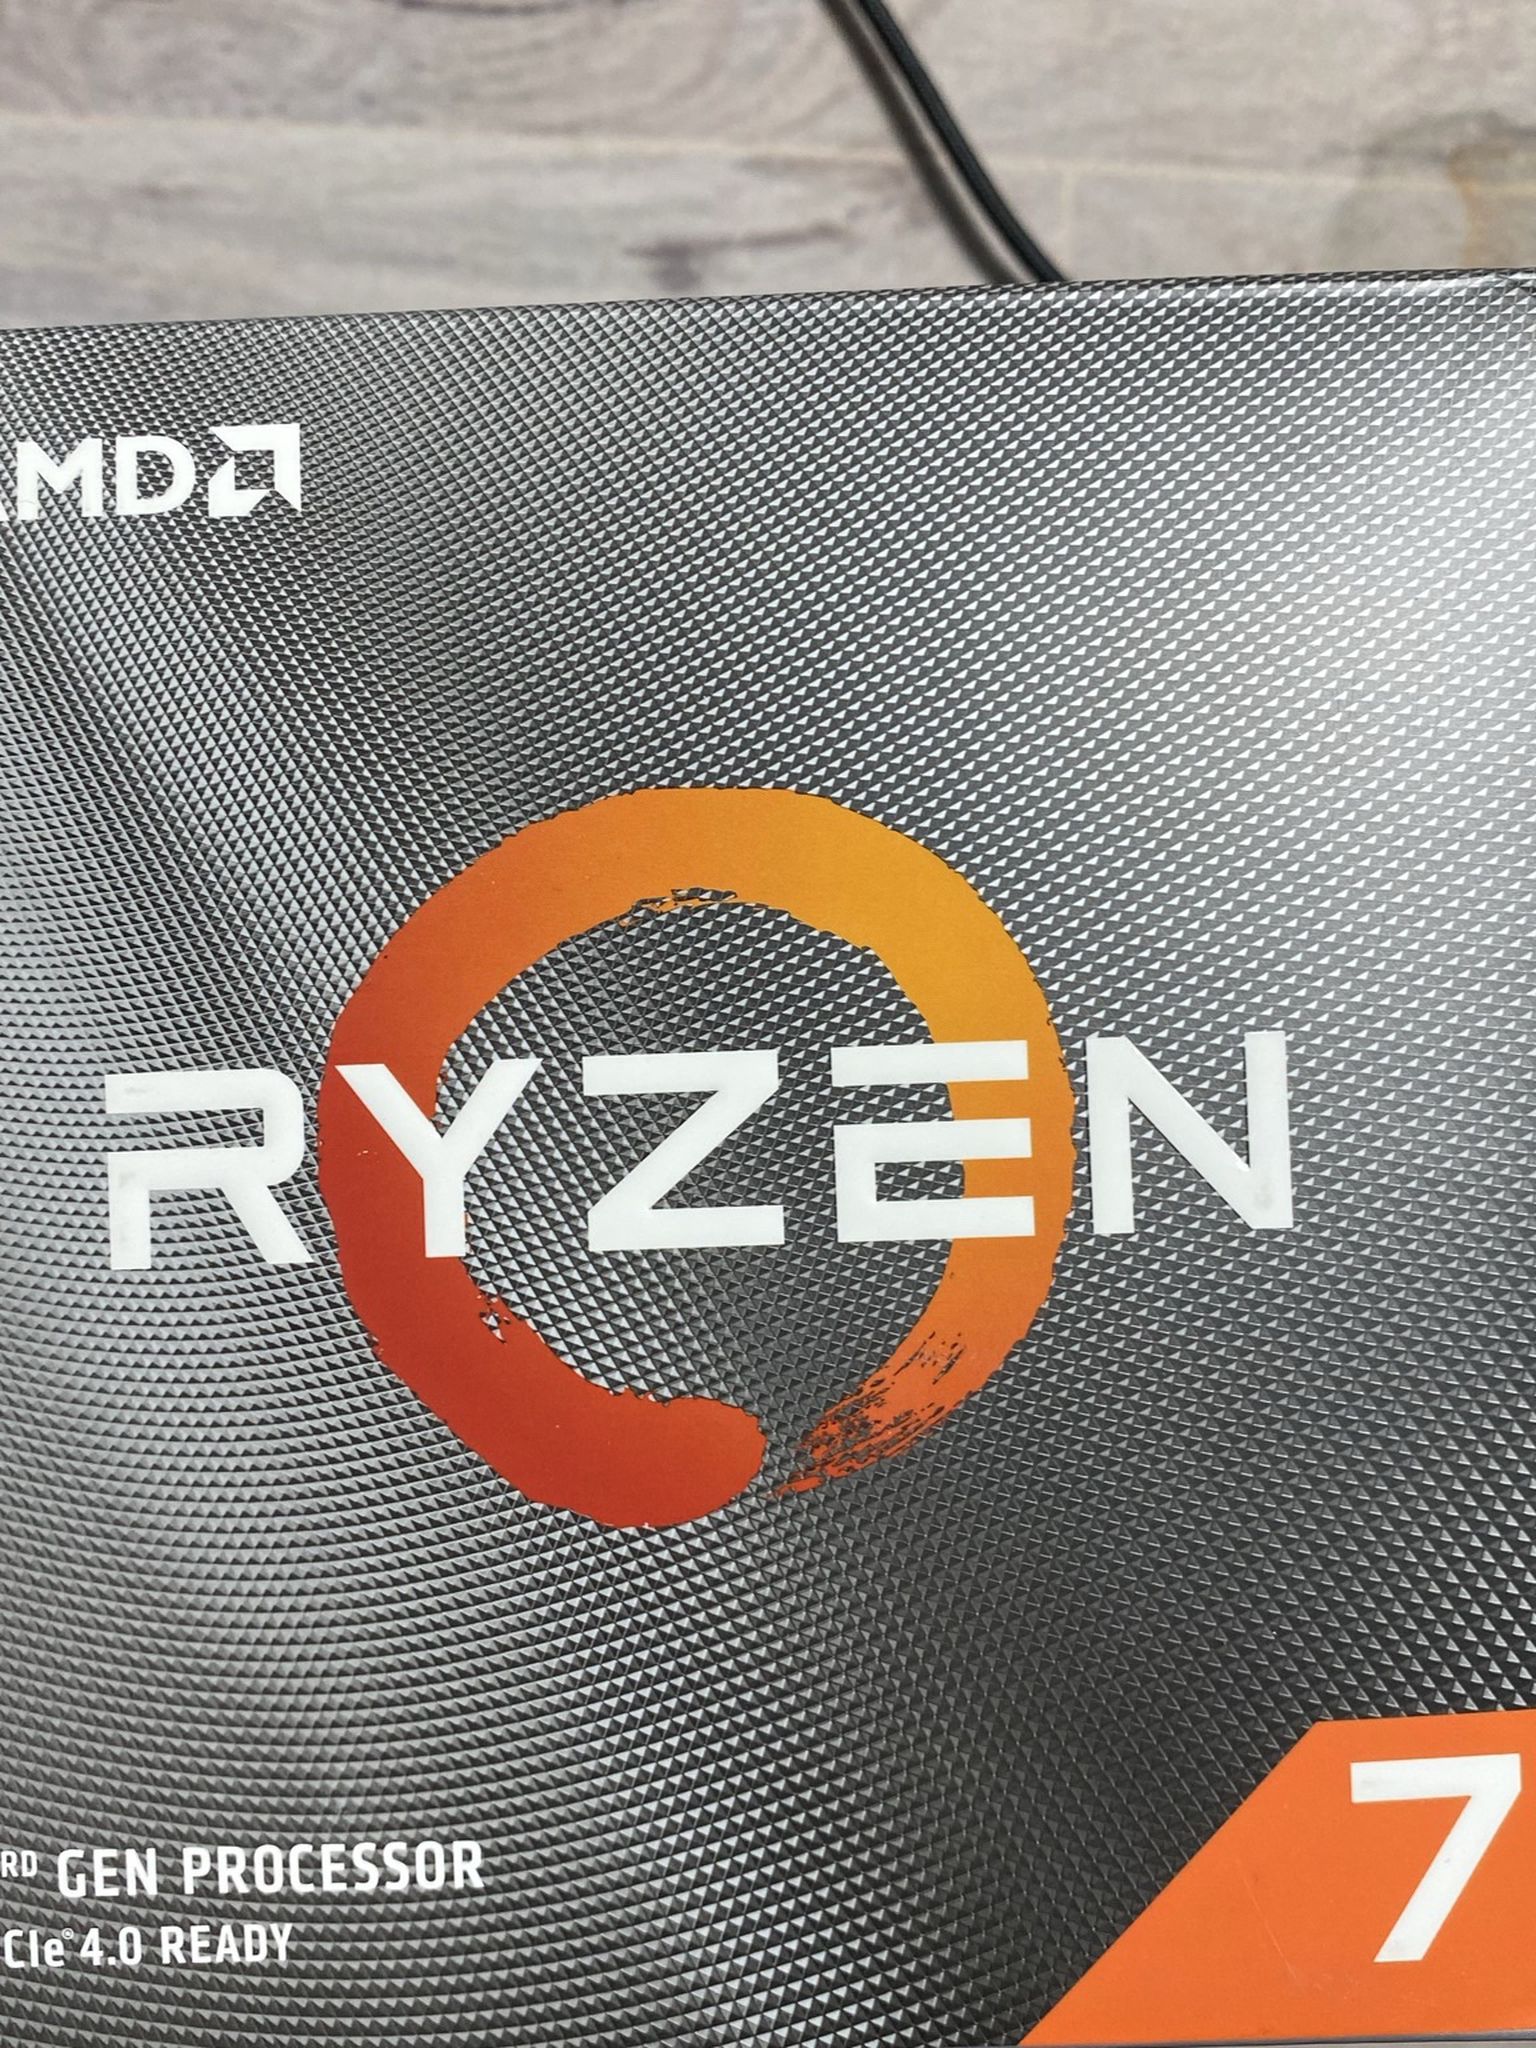 Ryzen 3700x CPU 8-core, 16-thread